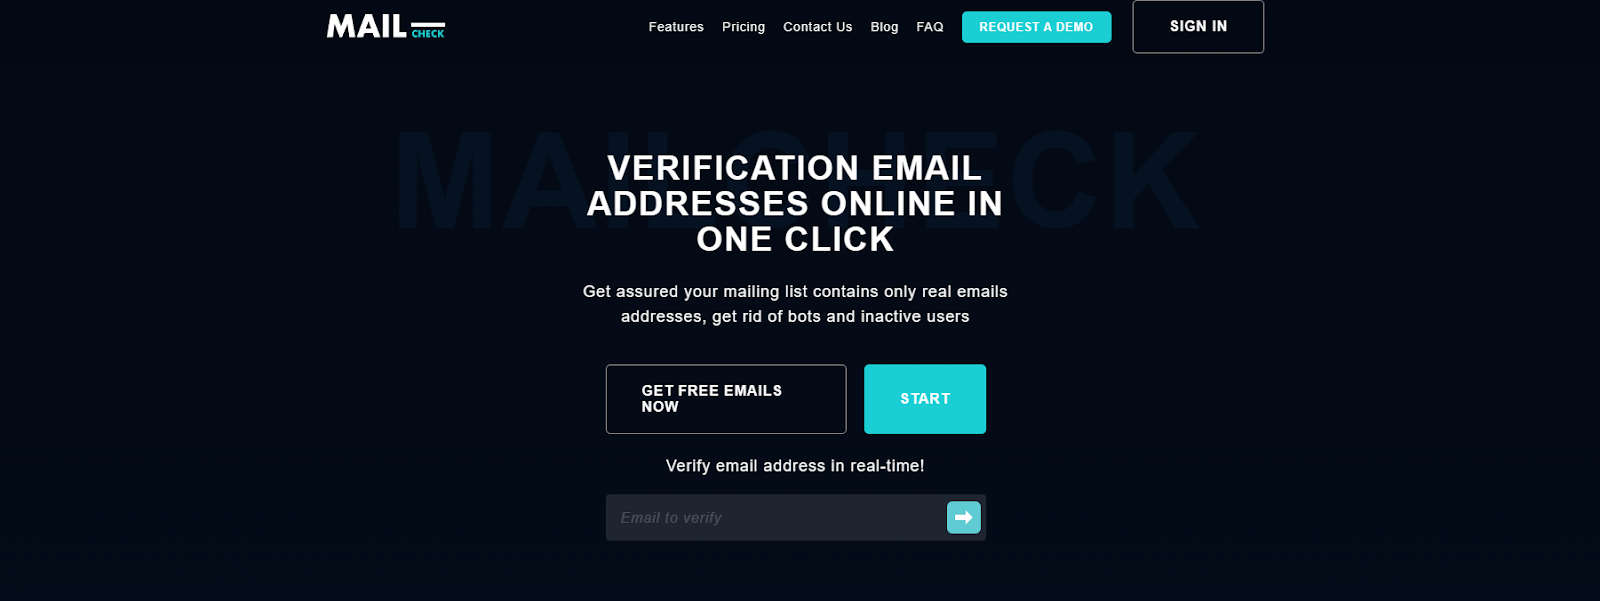 mailcheck homepage